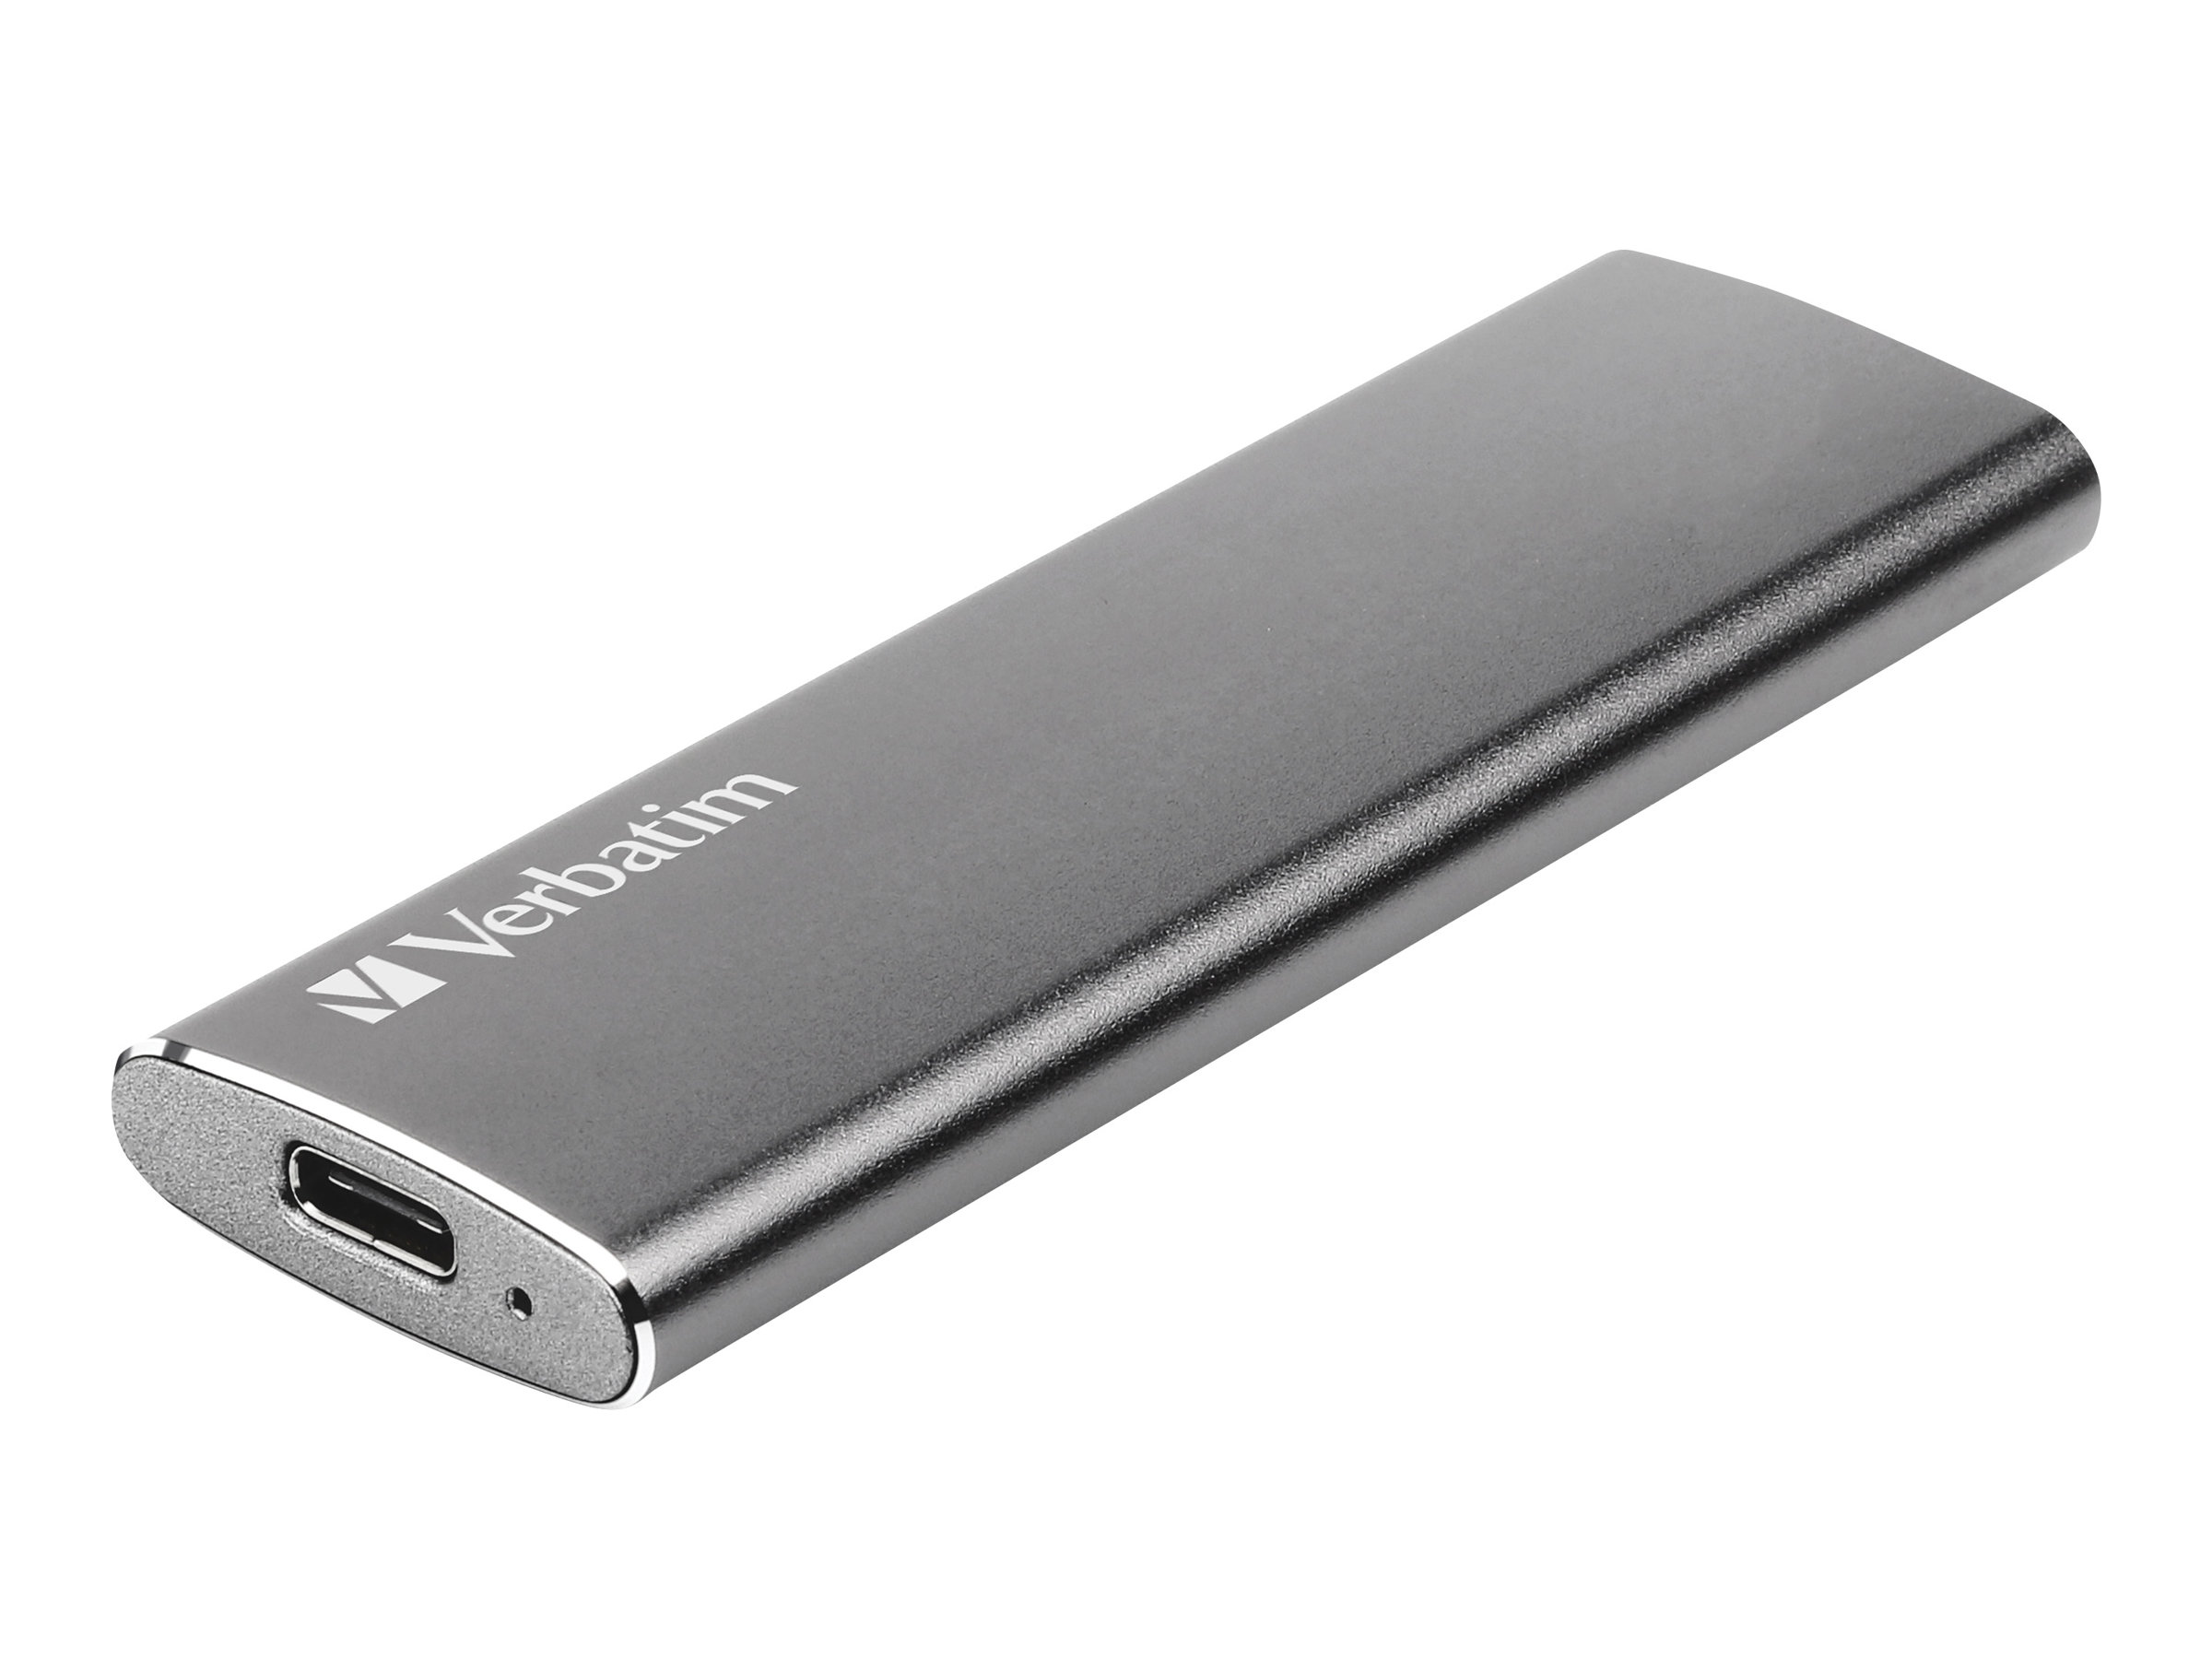 Verbatim Vx500 SSD 120GB Grau - externe Solid-State-Drive, USB 3.1 Typ-C